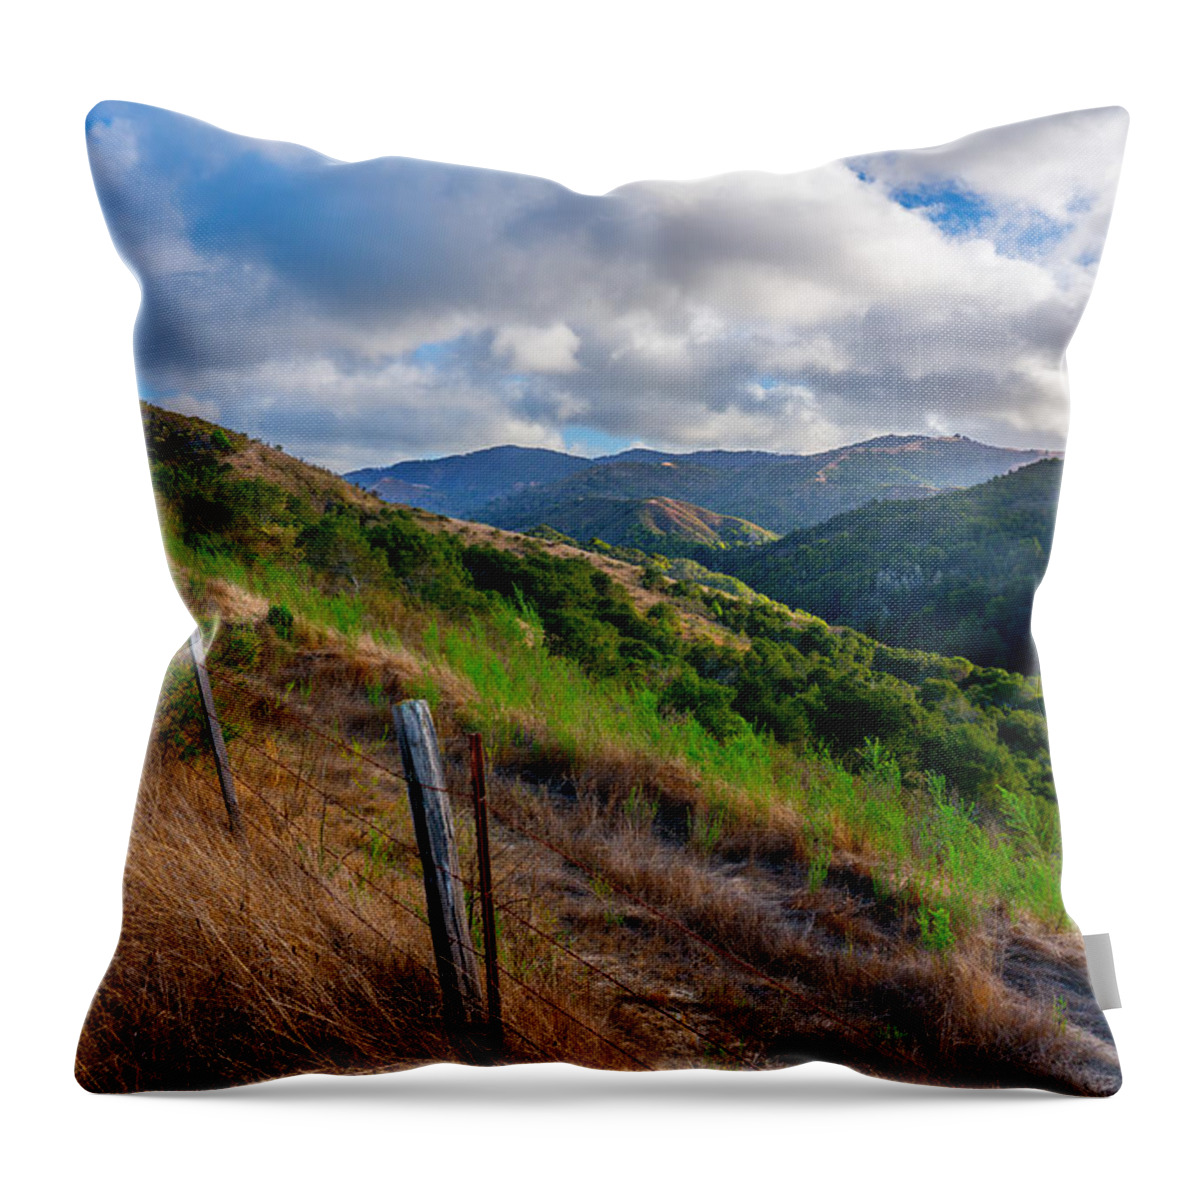 Santa Lucia Mountains Throw Pillow featuring the photograph Santa Lucia Mountains by Derek Dean